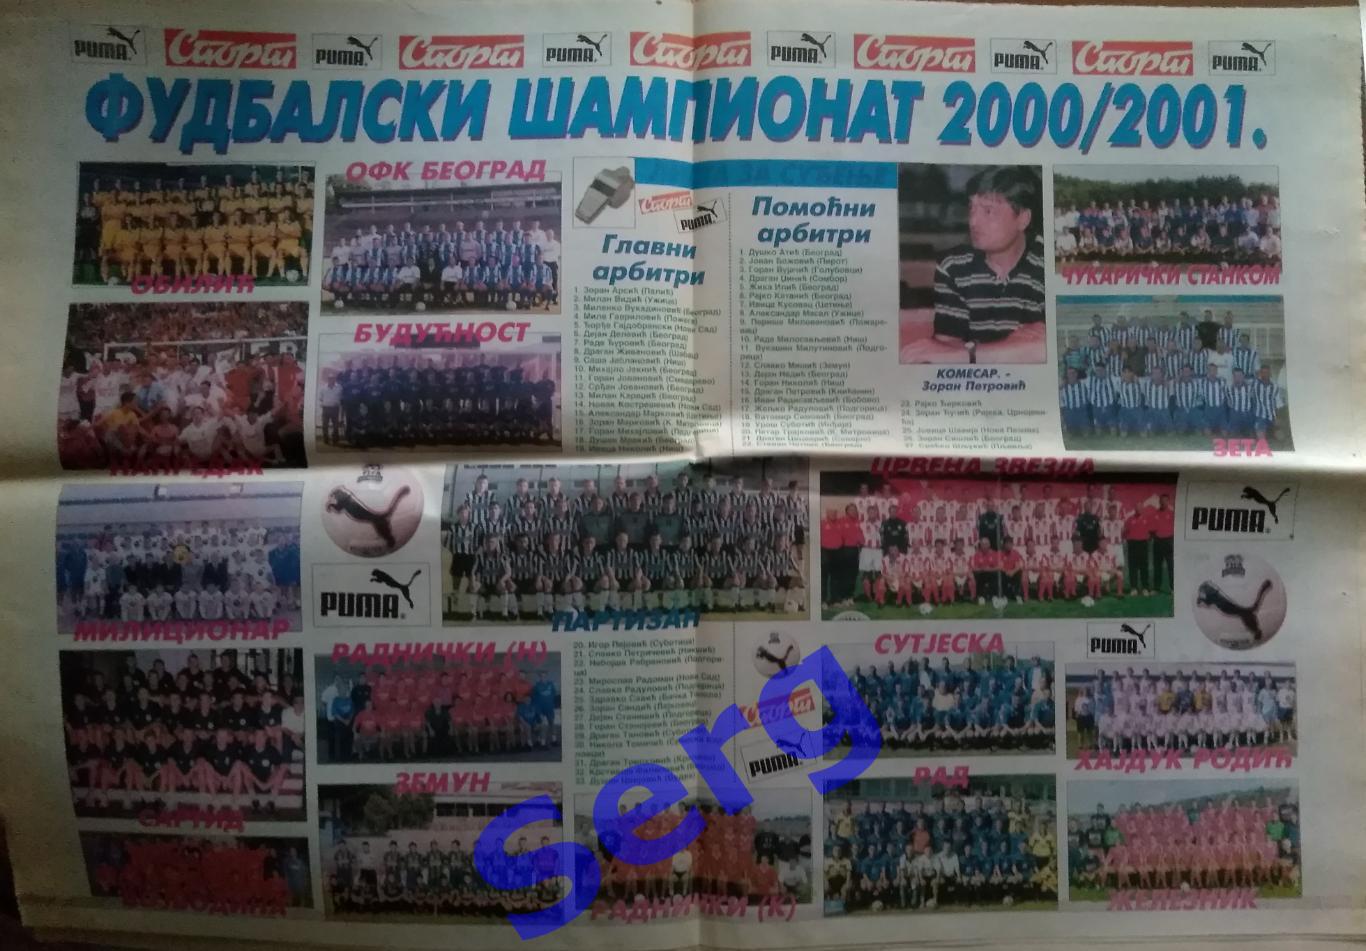 Газета Спорт/Спорт 12 августа 2000 год. Белград, Югославия 2